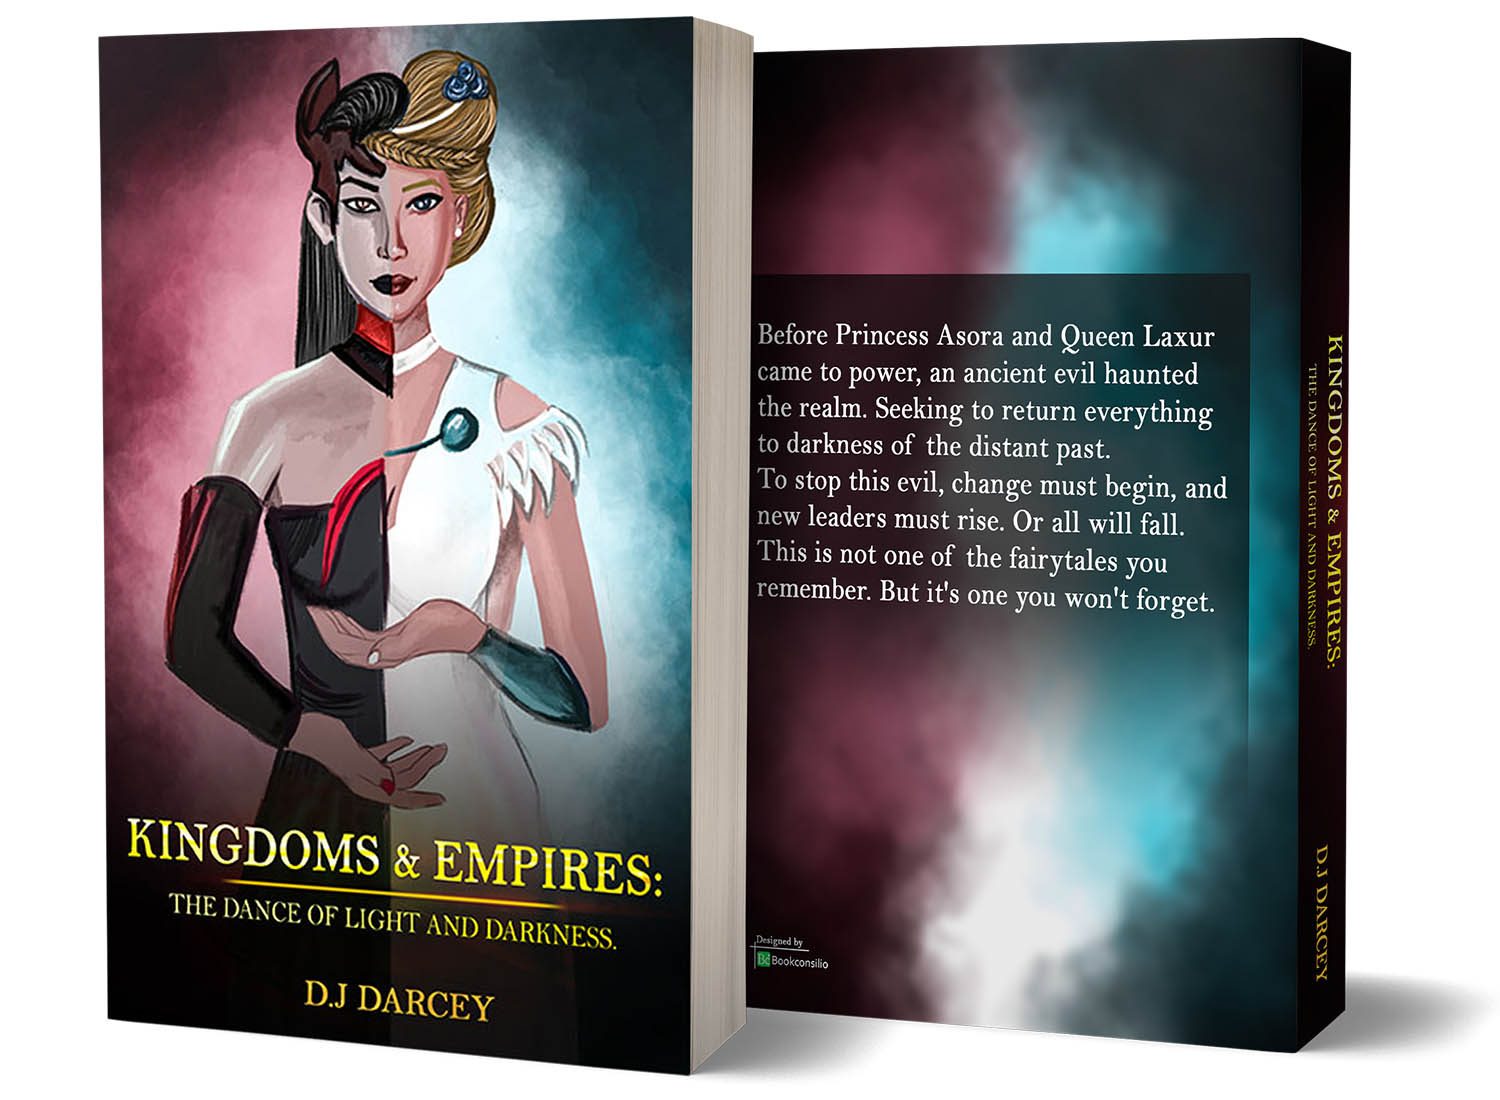 bookconsilio-portfolio-kingdomes-and-empires--the-dance-of-light-and-darkness-paperback-bookcoverdesign